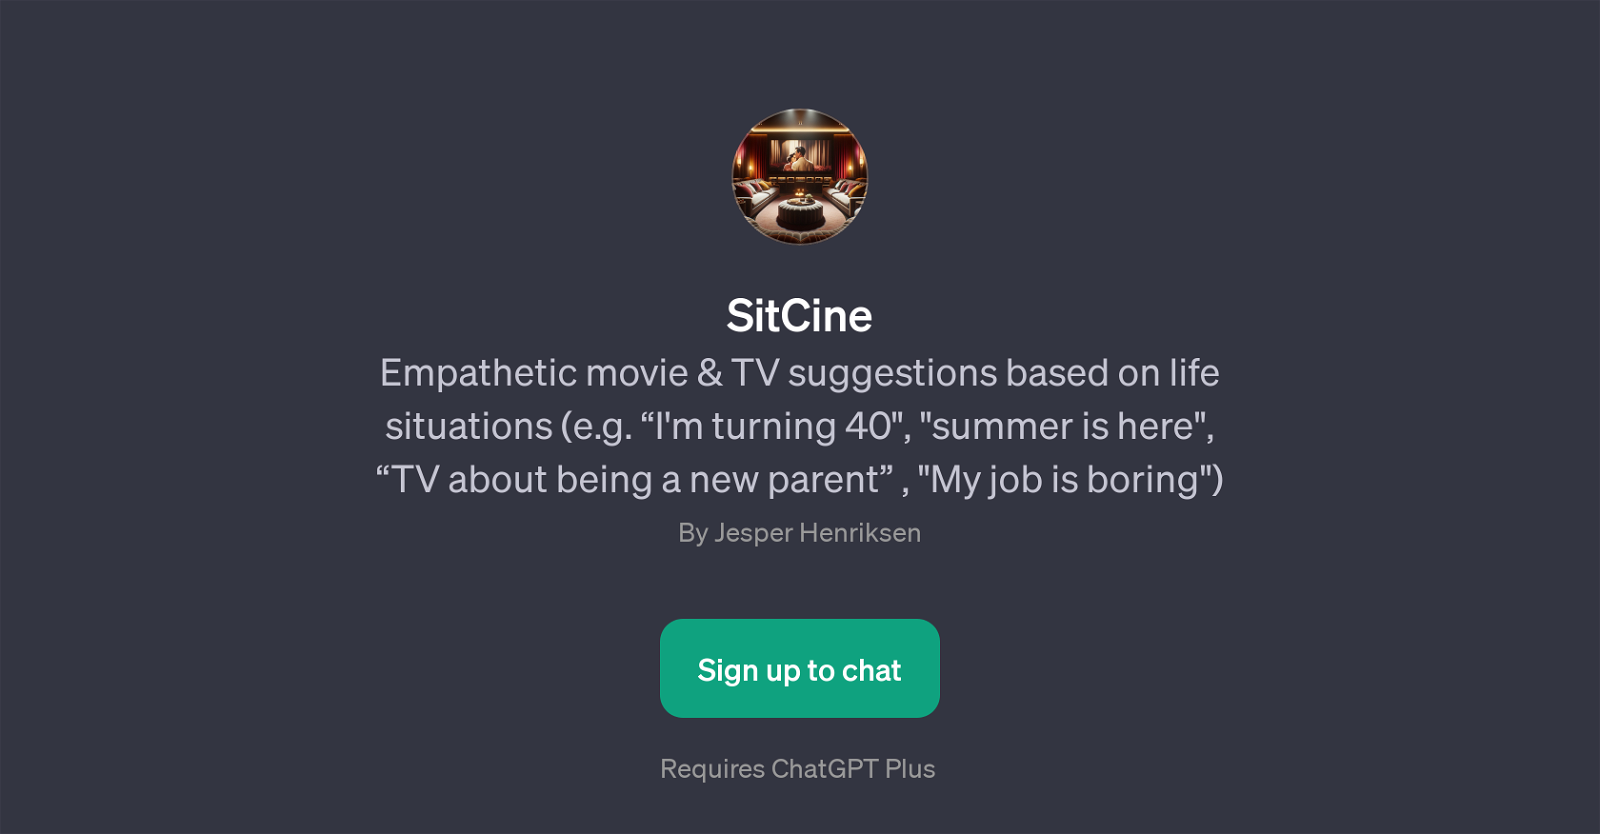 SitCine website